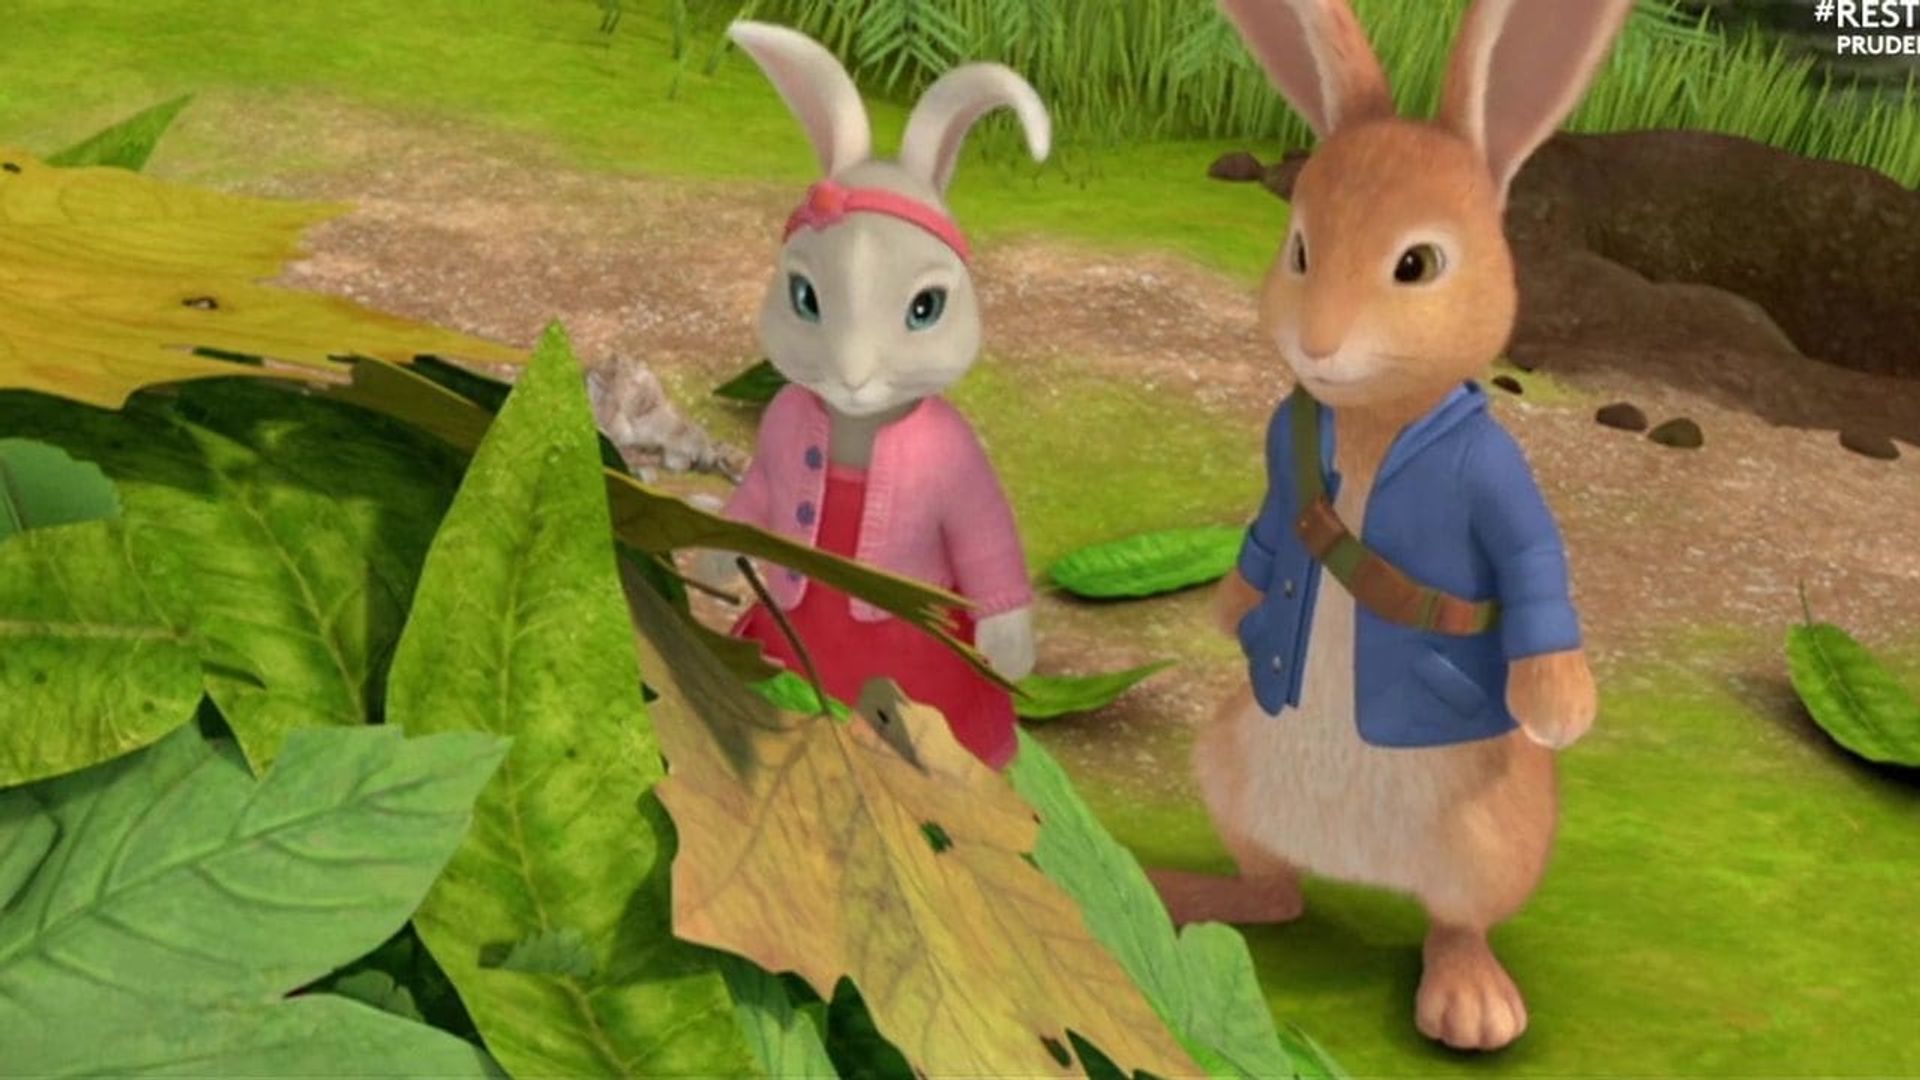 Peter Rabbit background